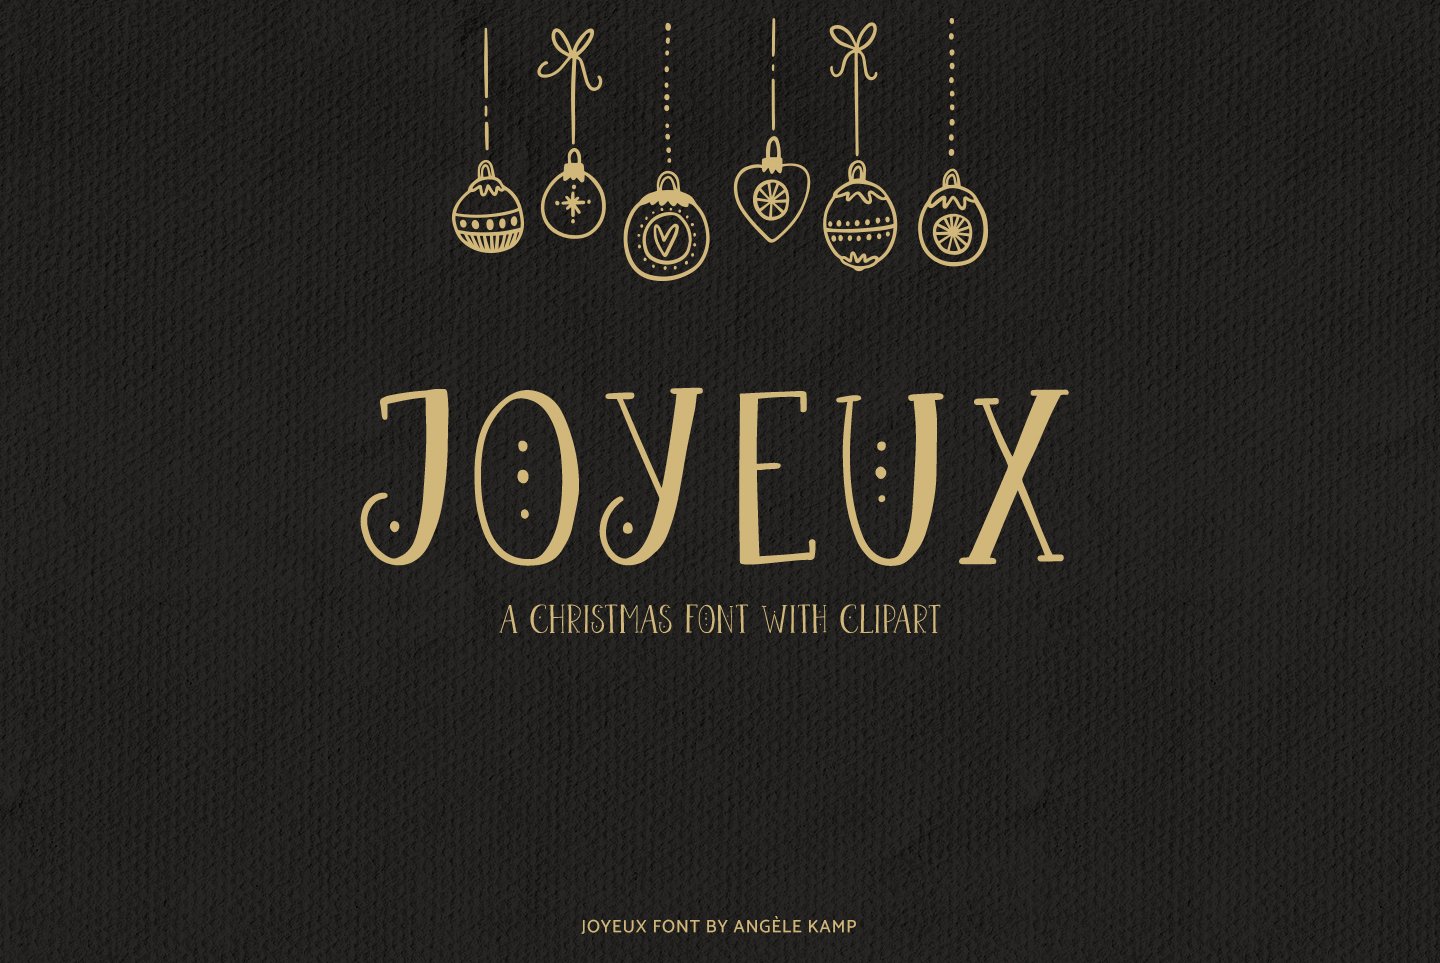 Joyeux Christmas font & clipart cover image.